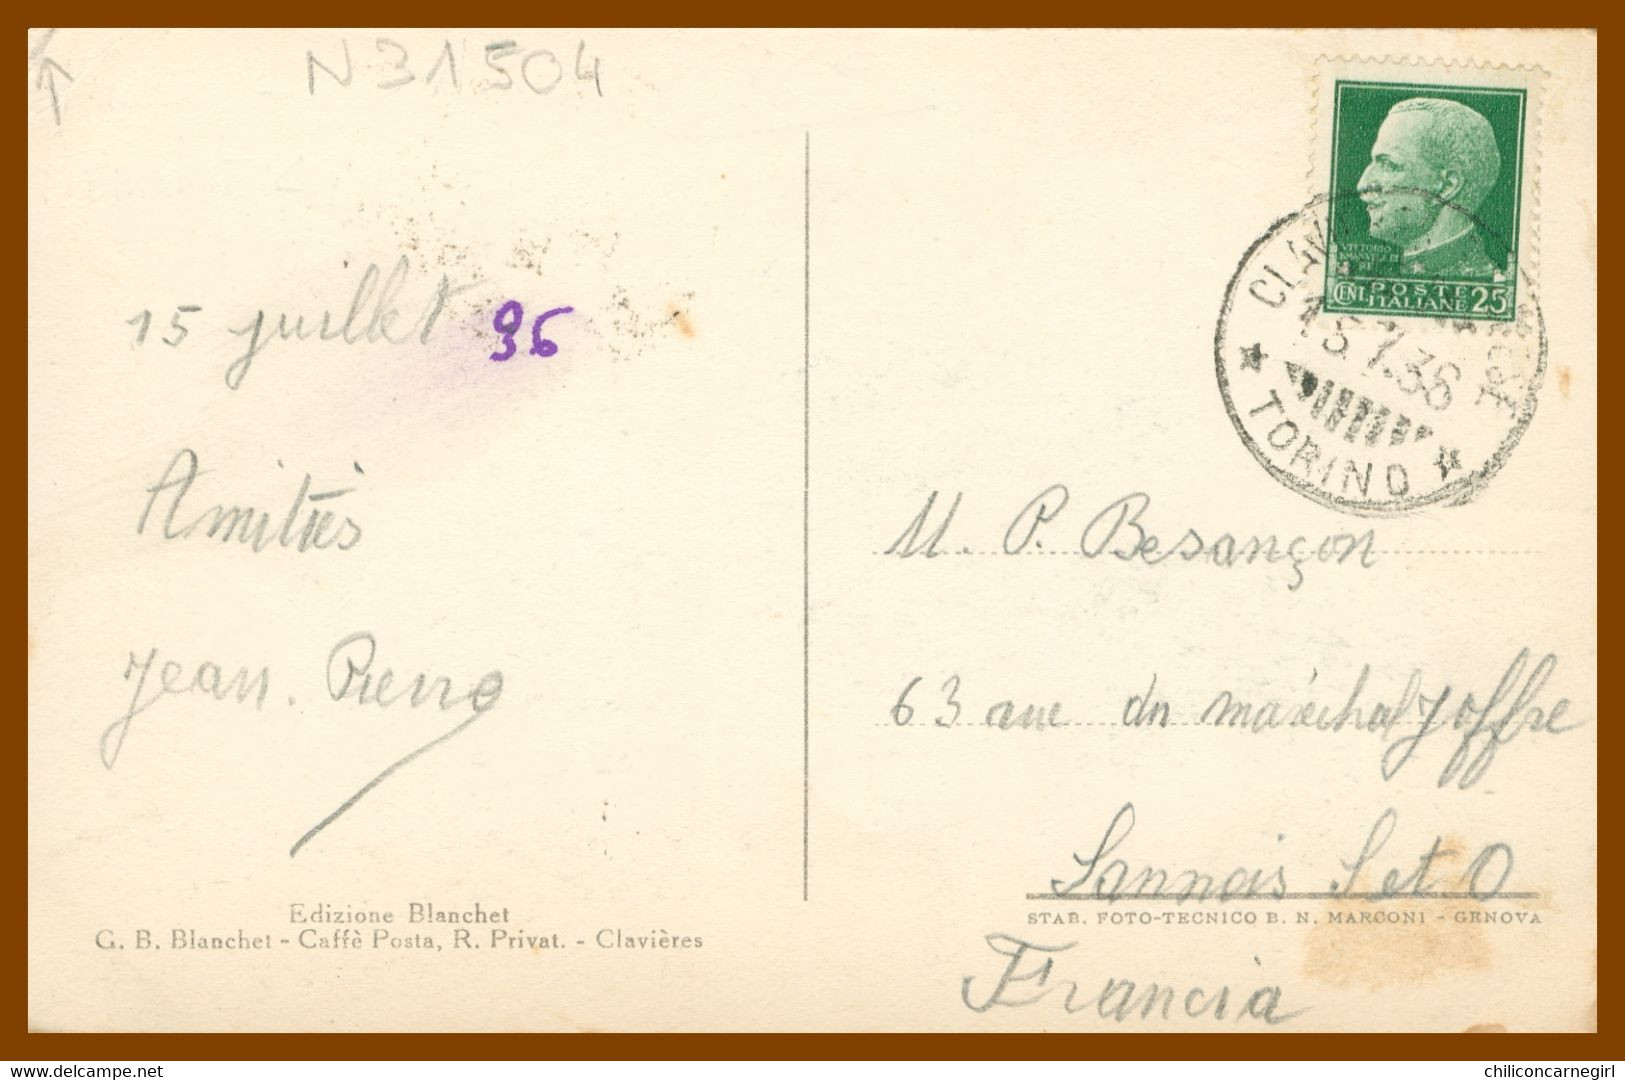 CLAVIERES - Albergo Savoia - Edit. BLANCHET Caffé Posta R. Privat. - Foto MARCONI - 1936 - Cafes, Hotels & Restaurants